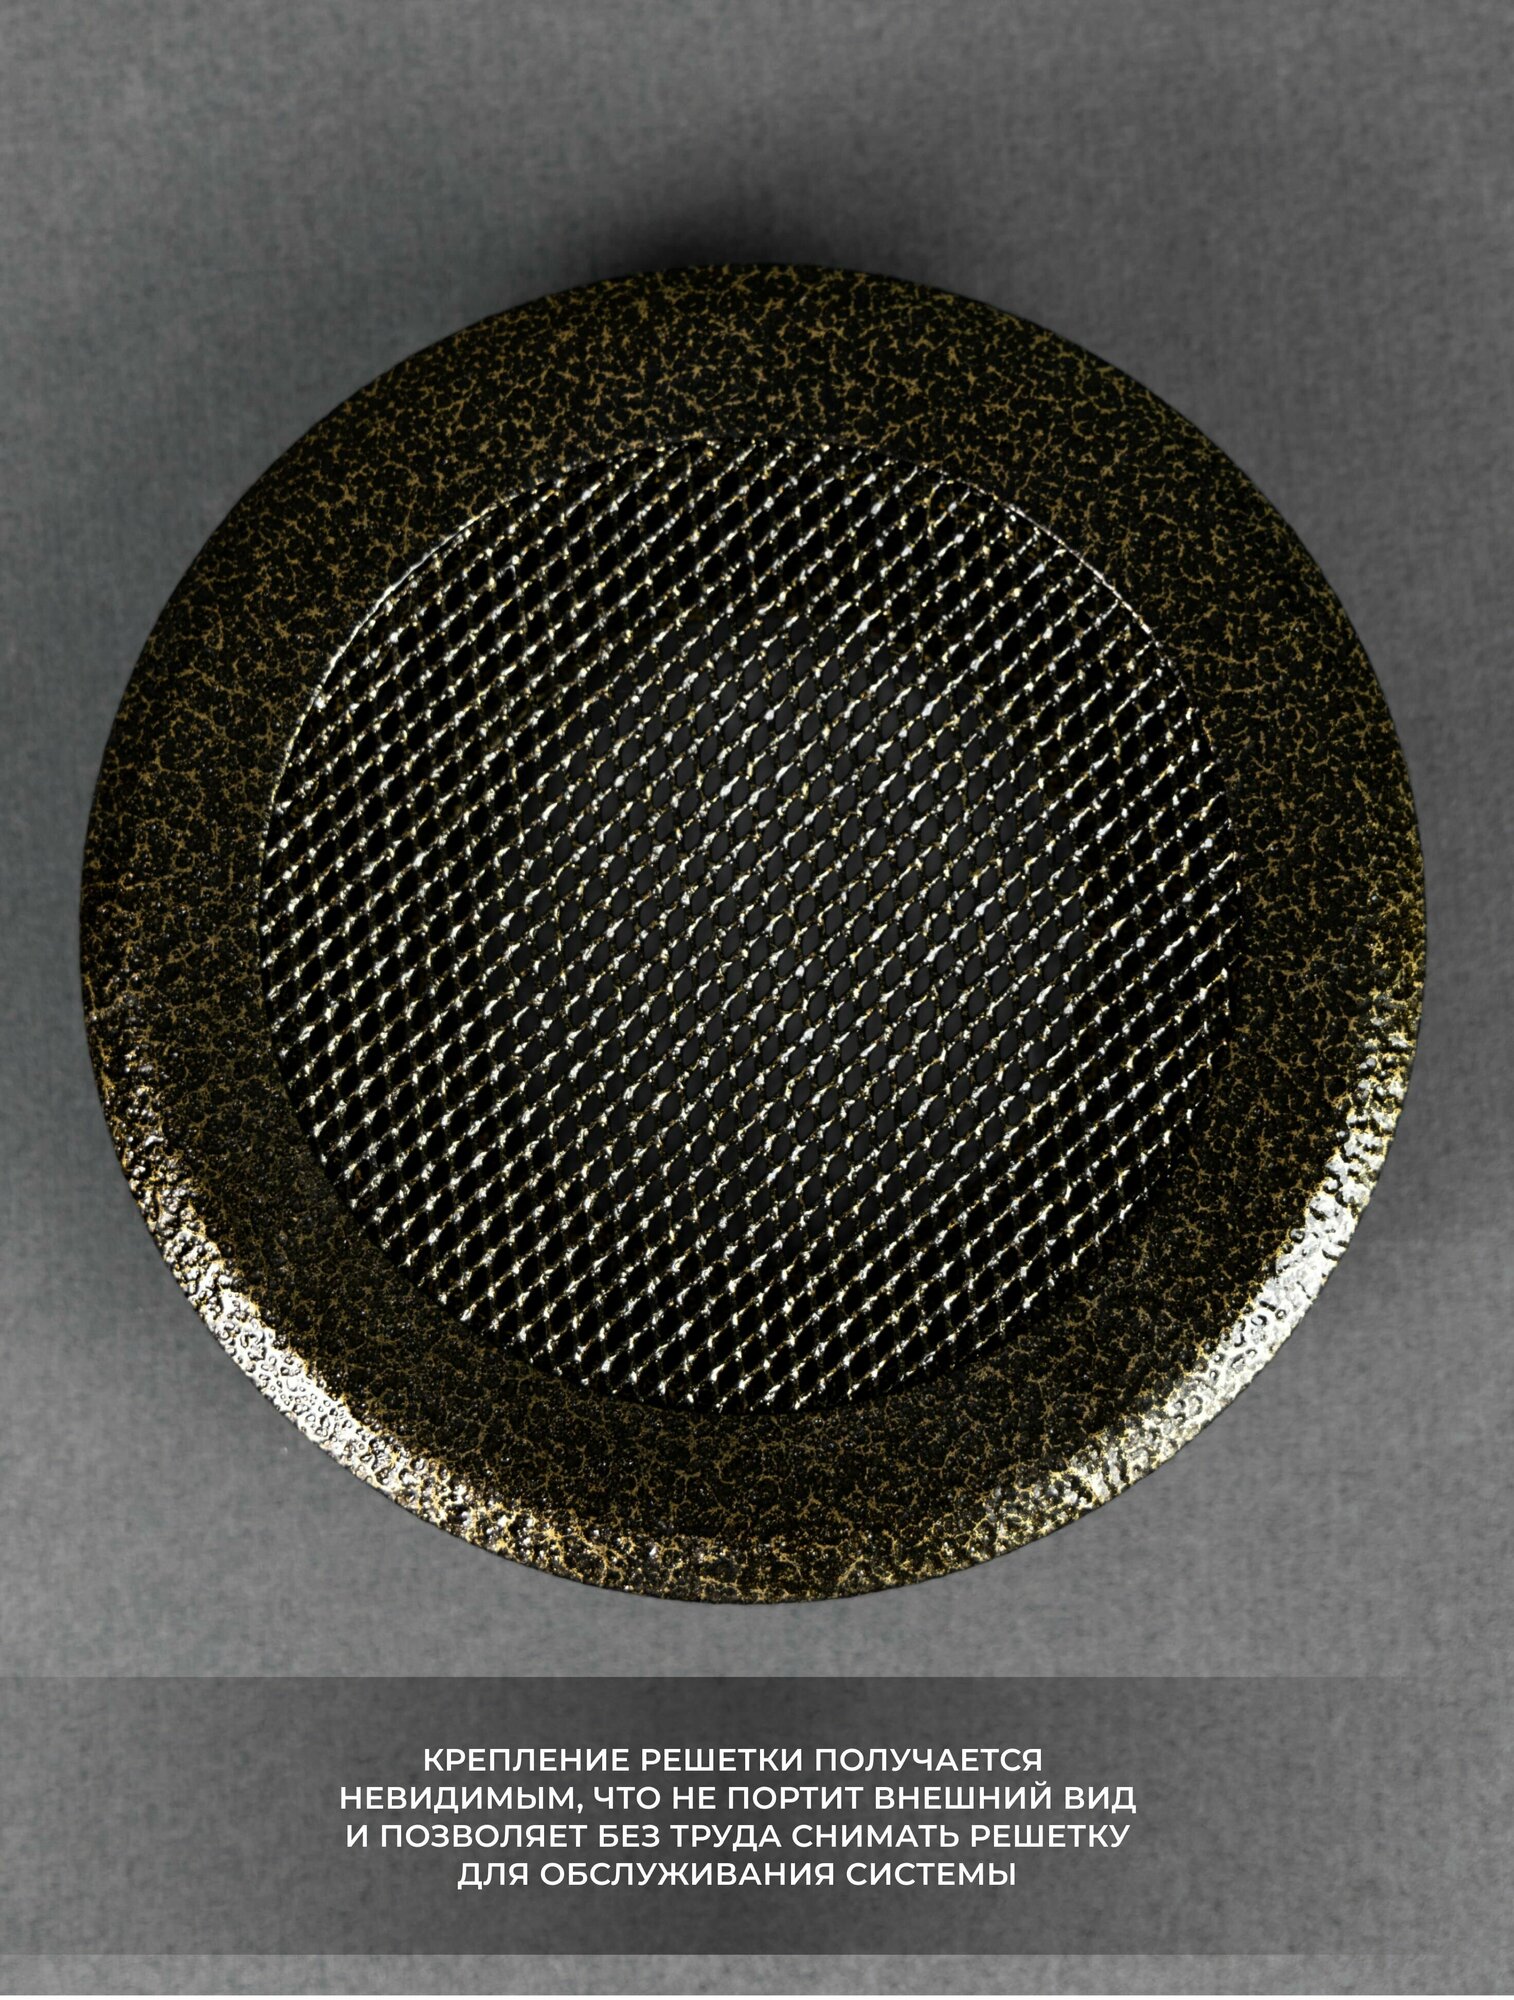 Вентиляционная решетка на магнитах 125x125 мм. съемная (125 крок), металлическая, от производителя Родфер - фотография № 5